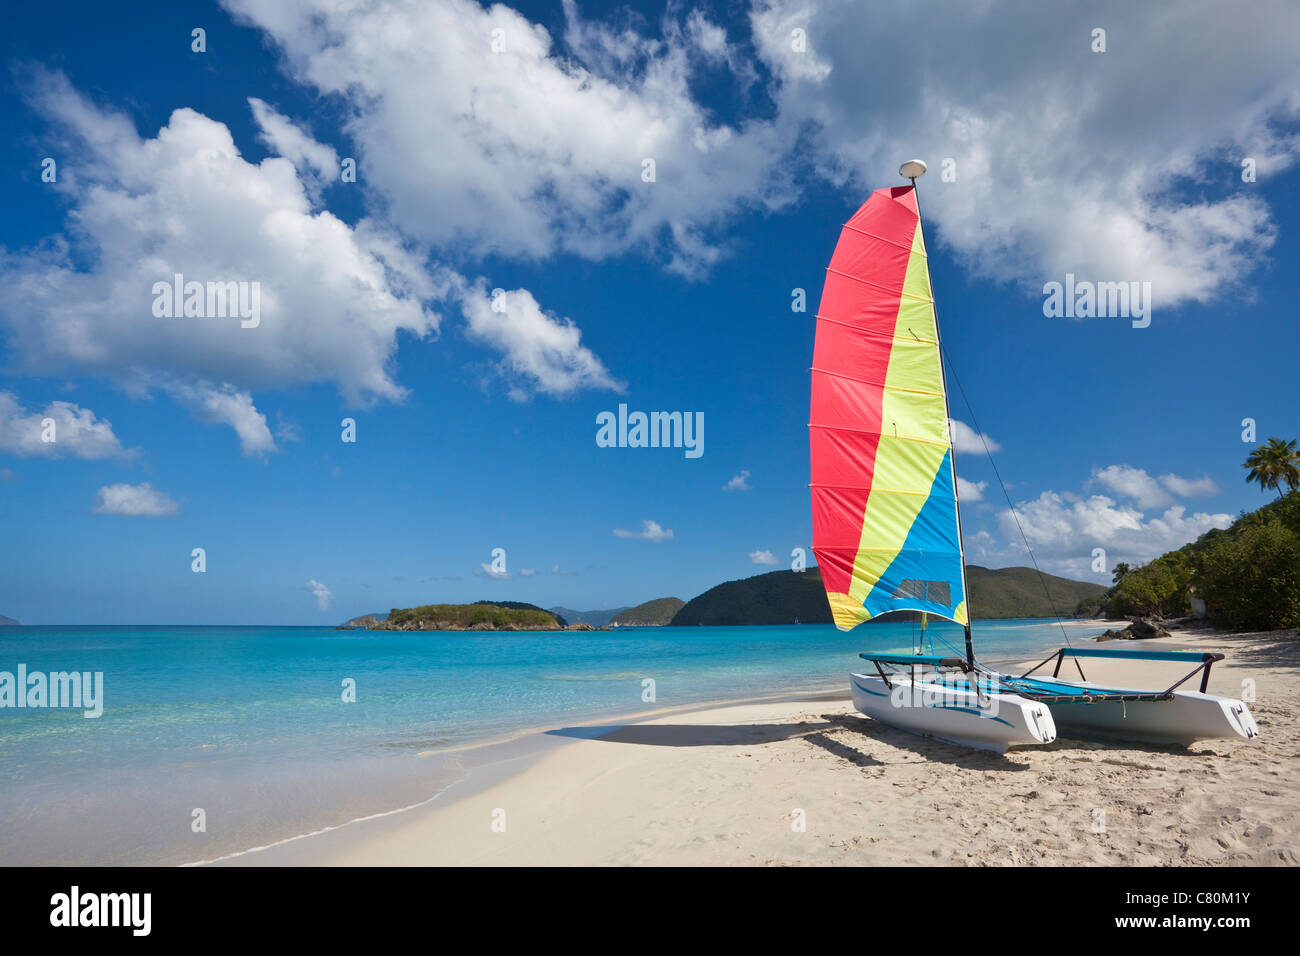 Sail boat on a tropical beach Stock Photo